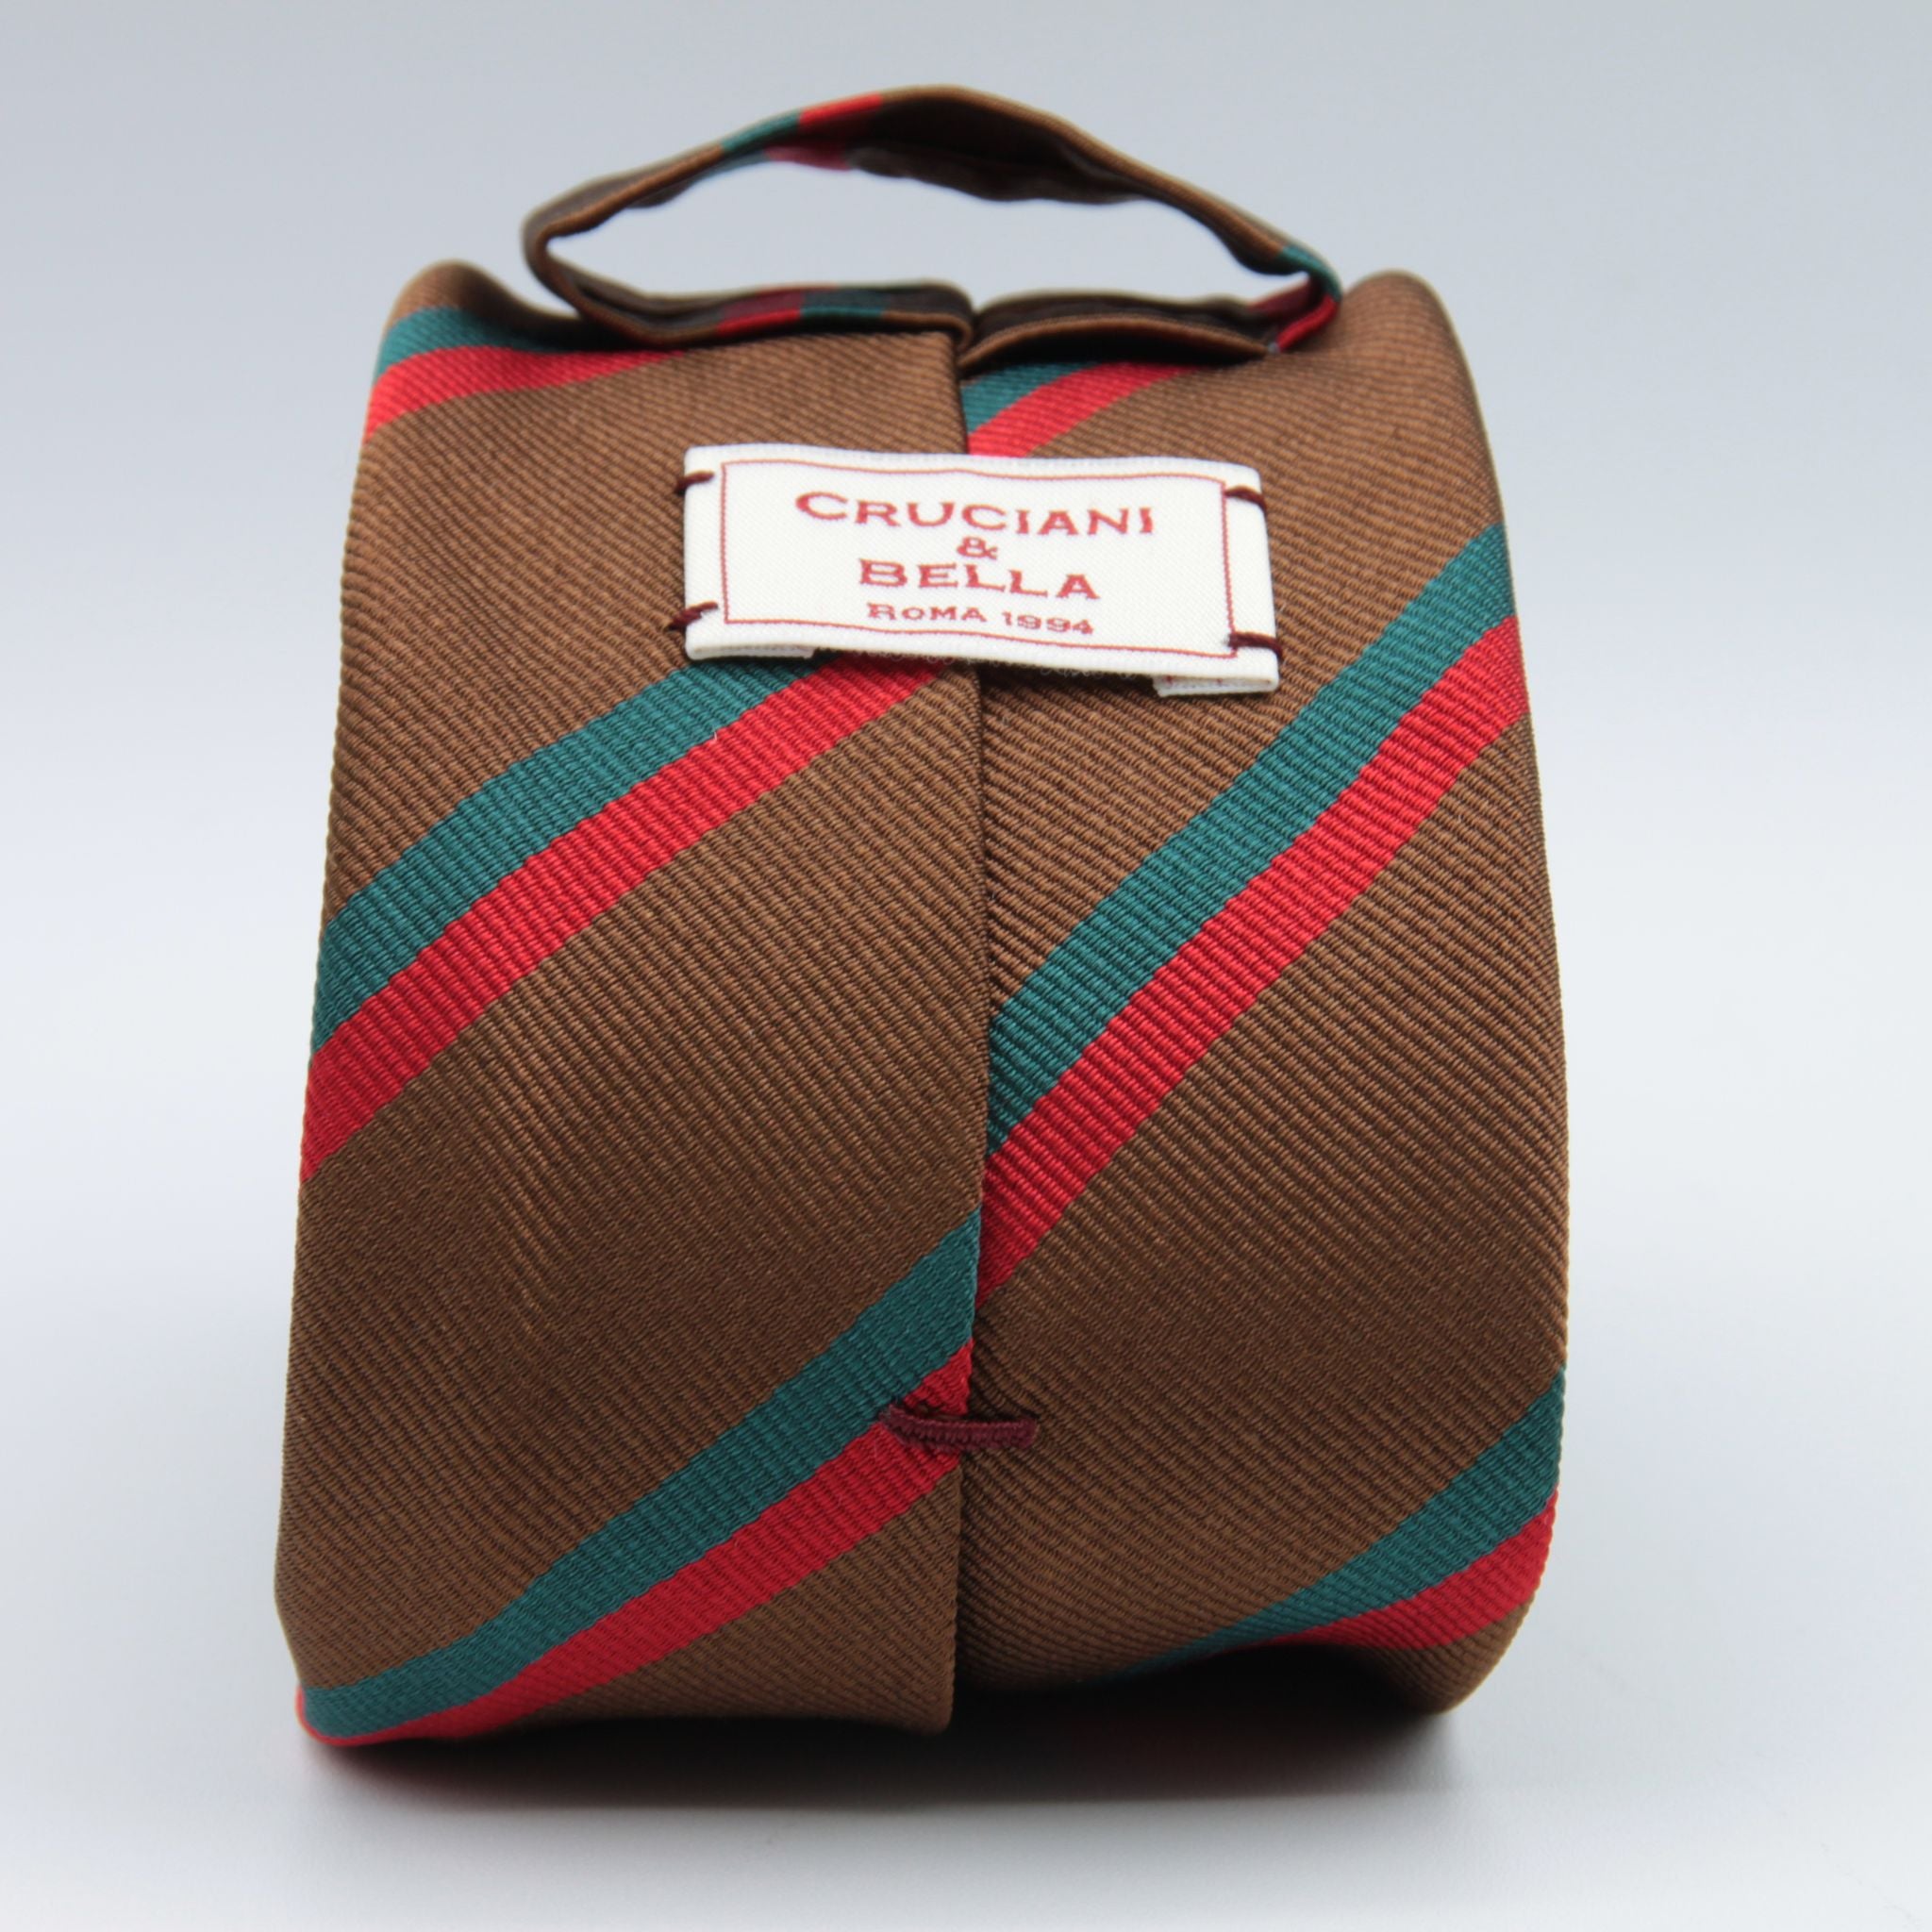 Cruciani & Bella 100% Silk Slim Shape Jacquard  Unlined Regimental "Royal Tank" Brown, Red and Green stripes tie Handmade in Italy 8 cm x 150 cm #7708